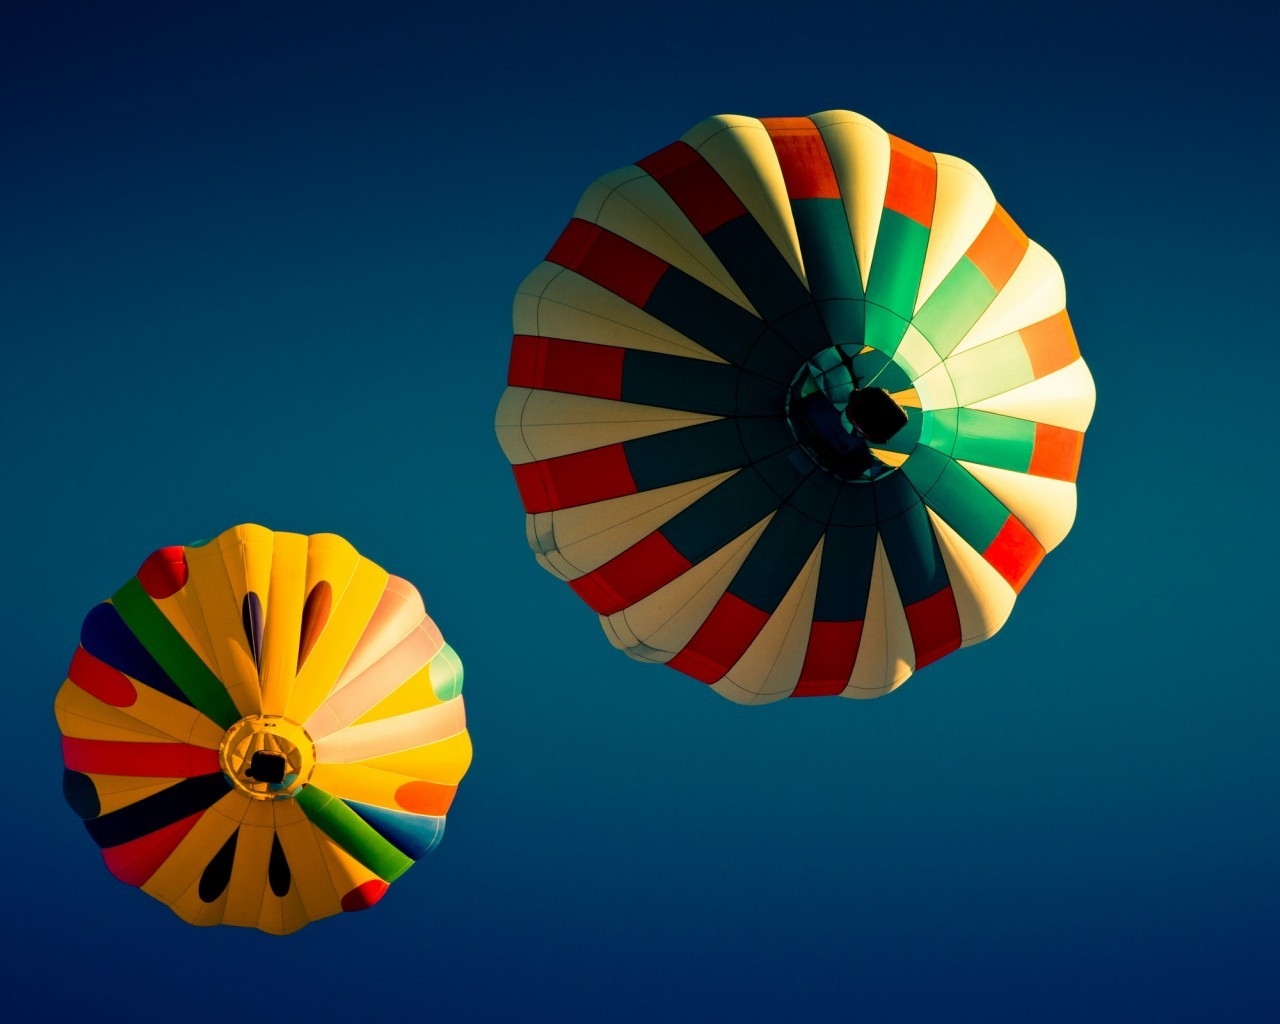 Hot Air Balloon Ride for 1280 x 1024 resolution